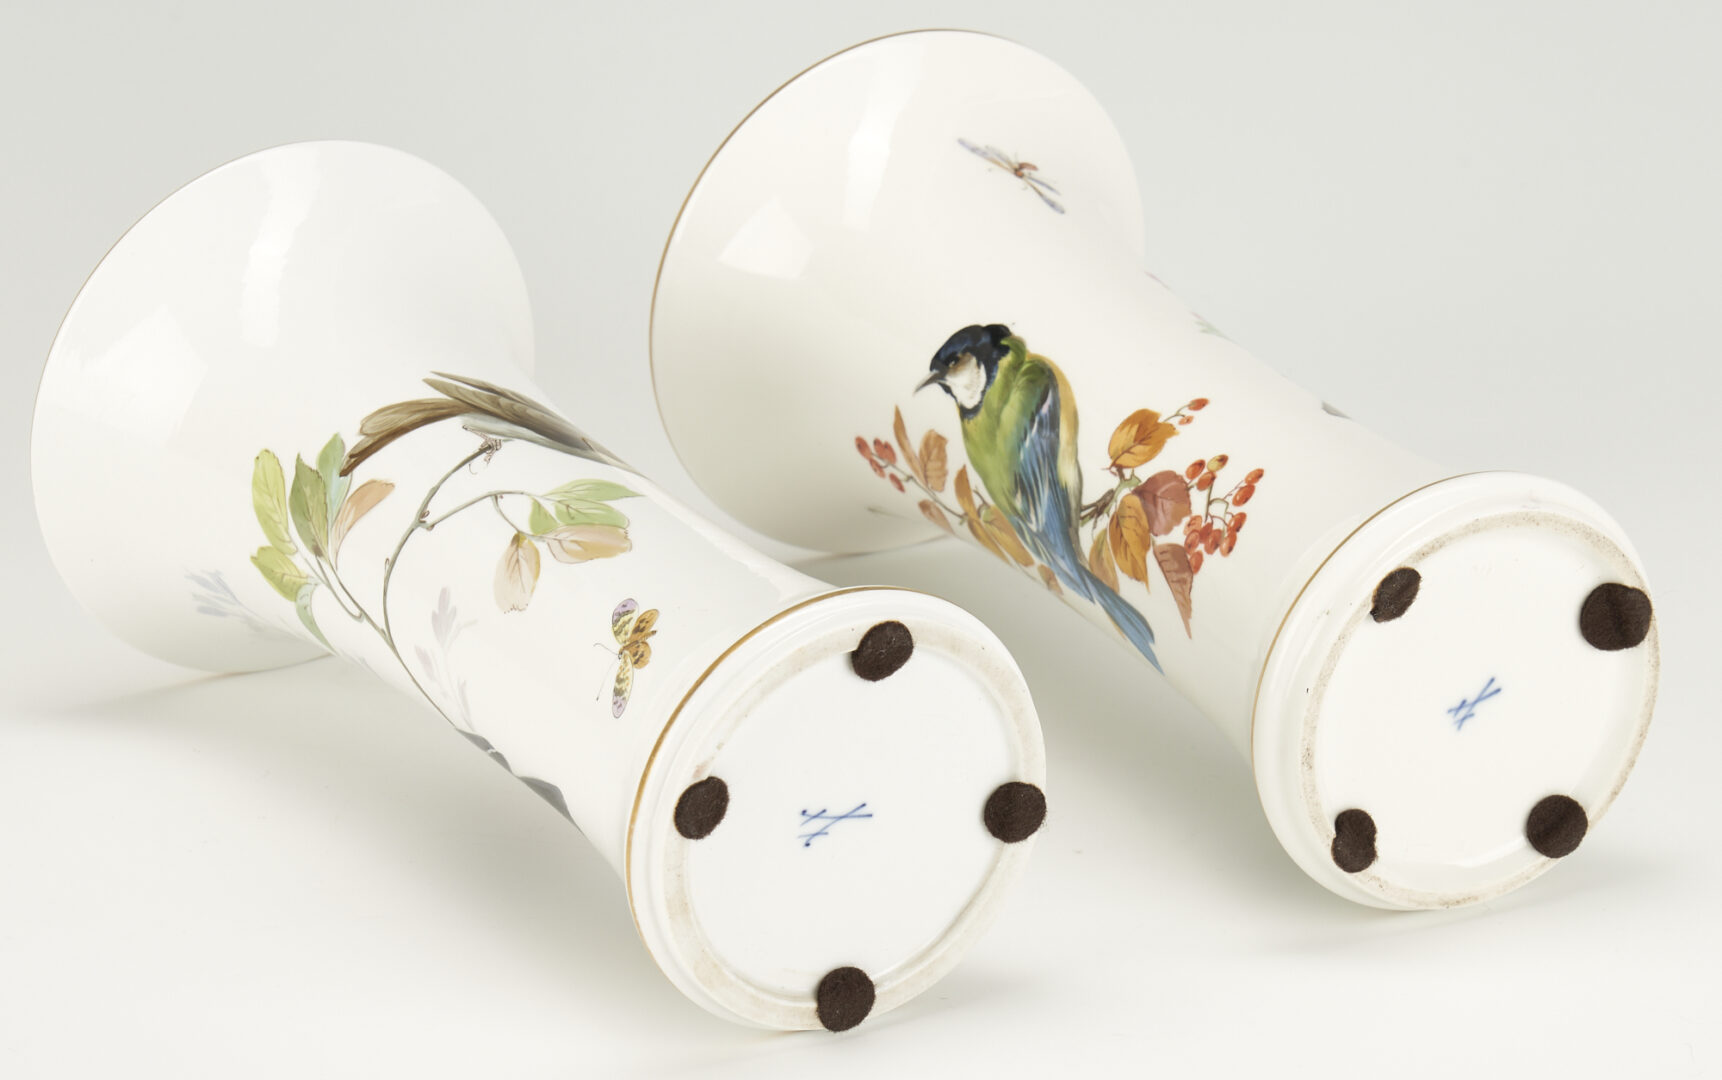 Lot 996: 3 Meissen Porcelain Bird & Insect Items, Vases & Platter